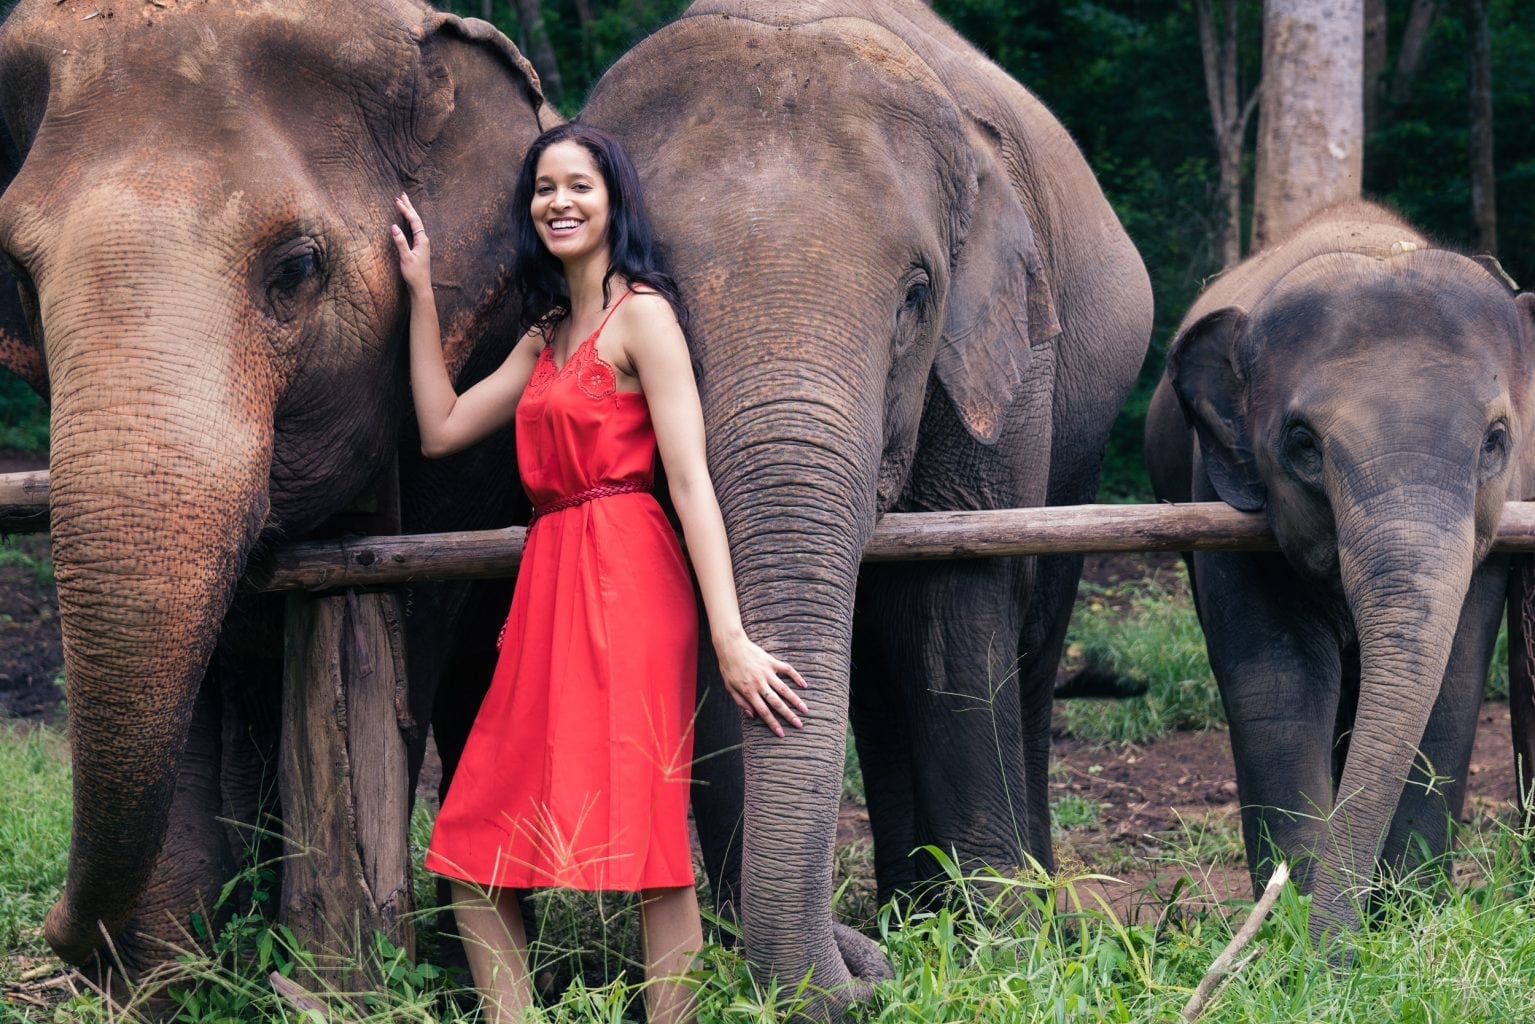 Keir Alexa with elephant